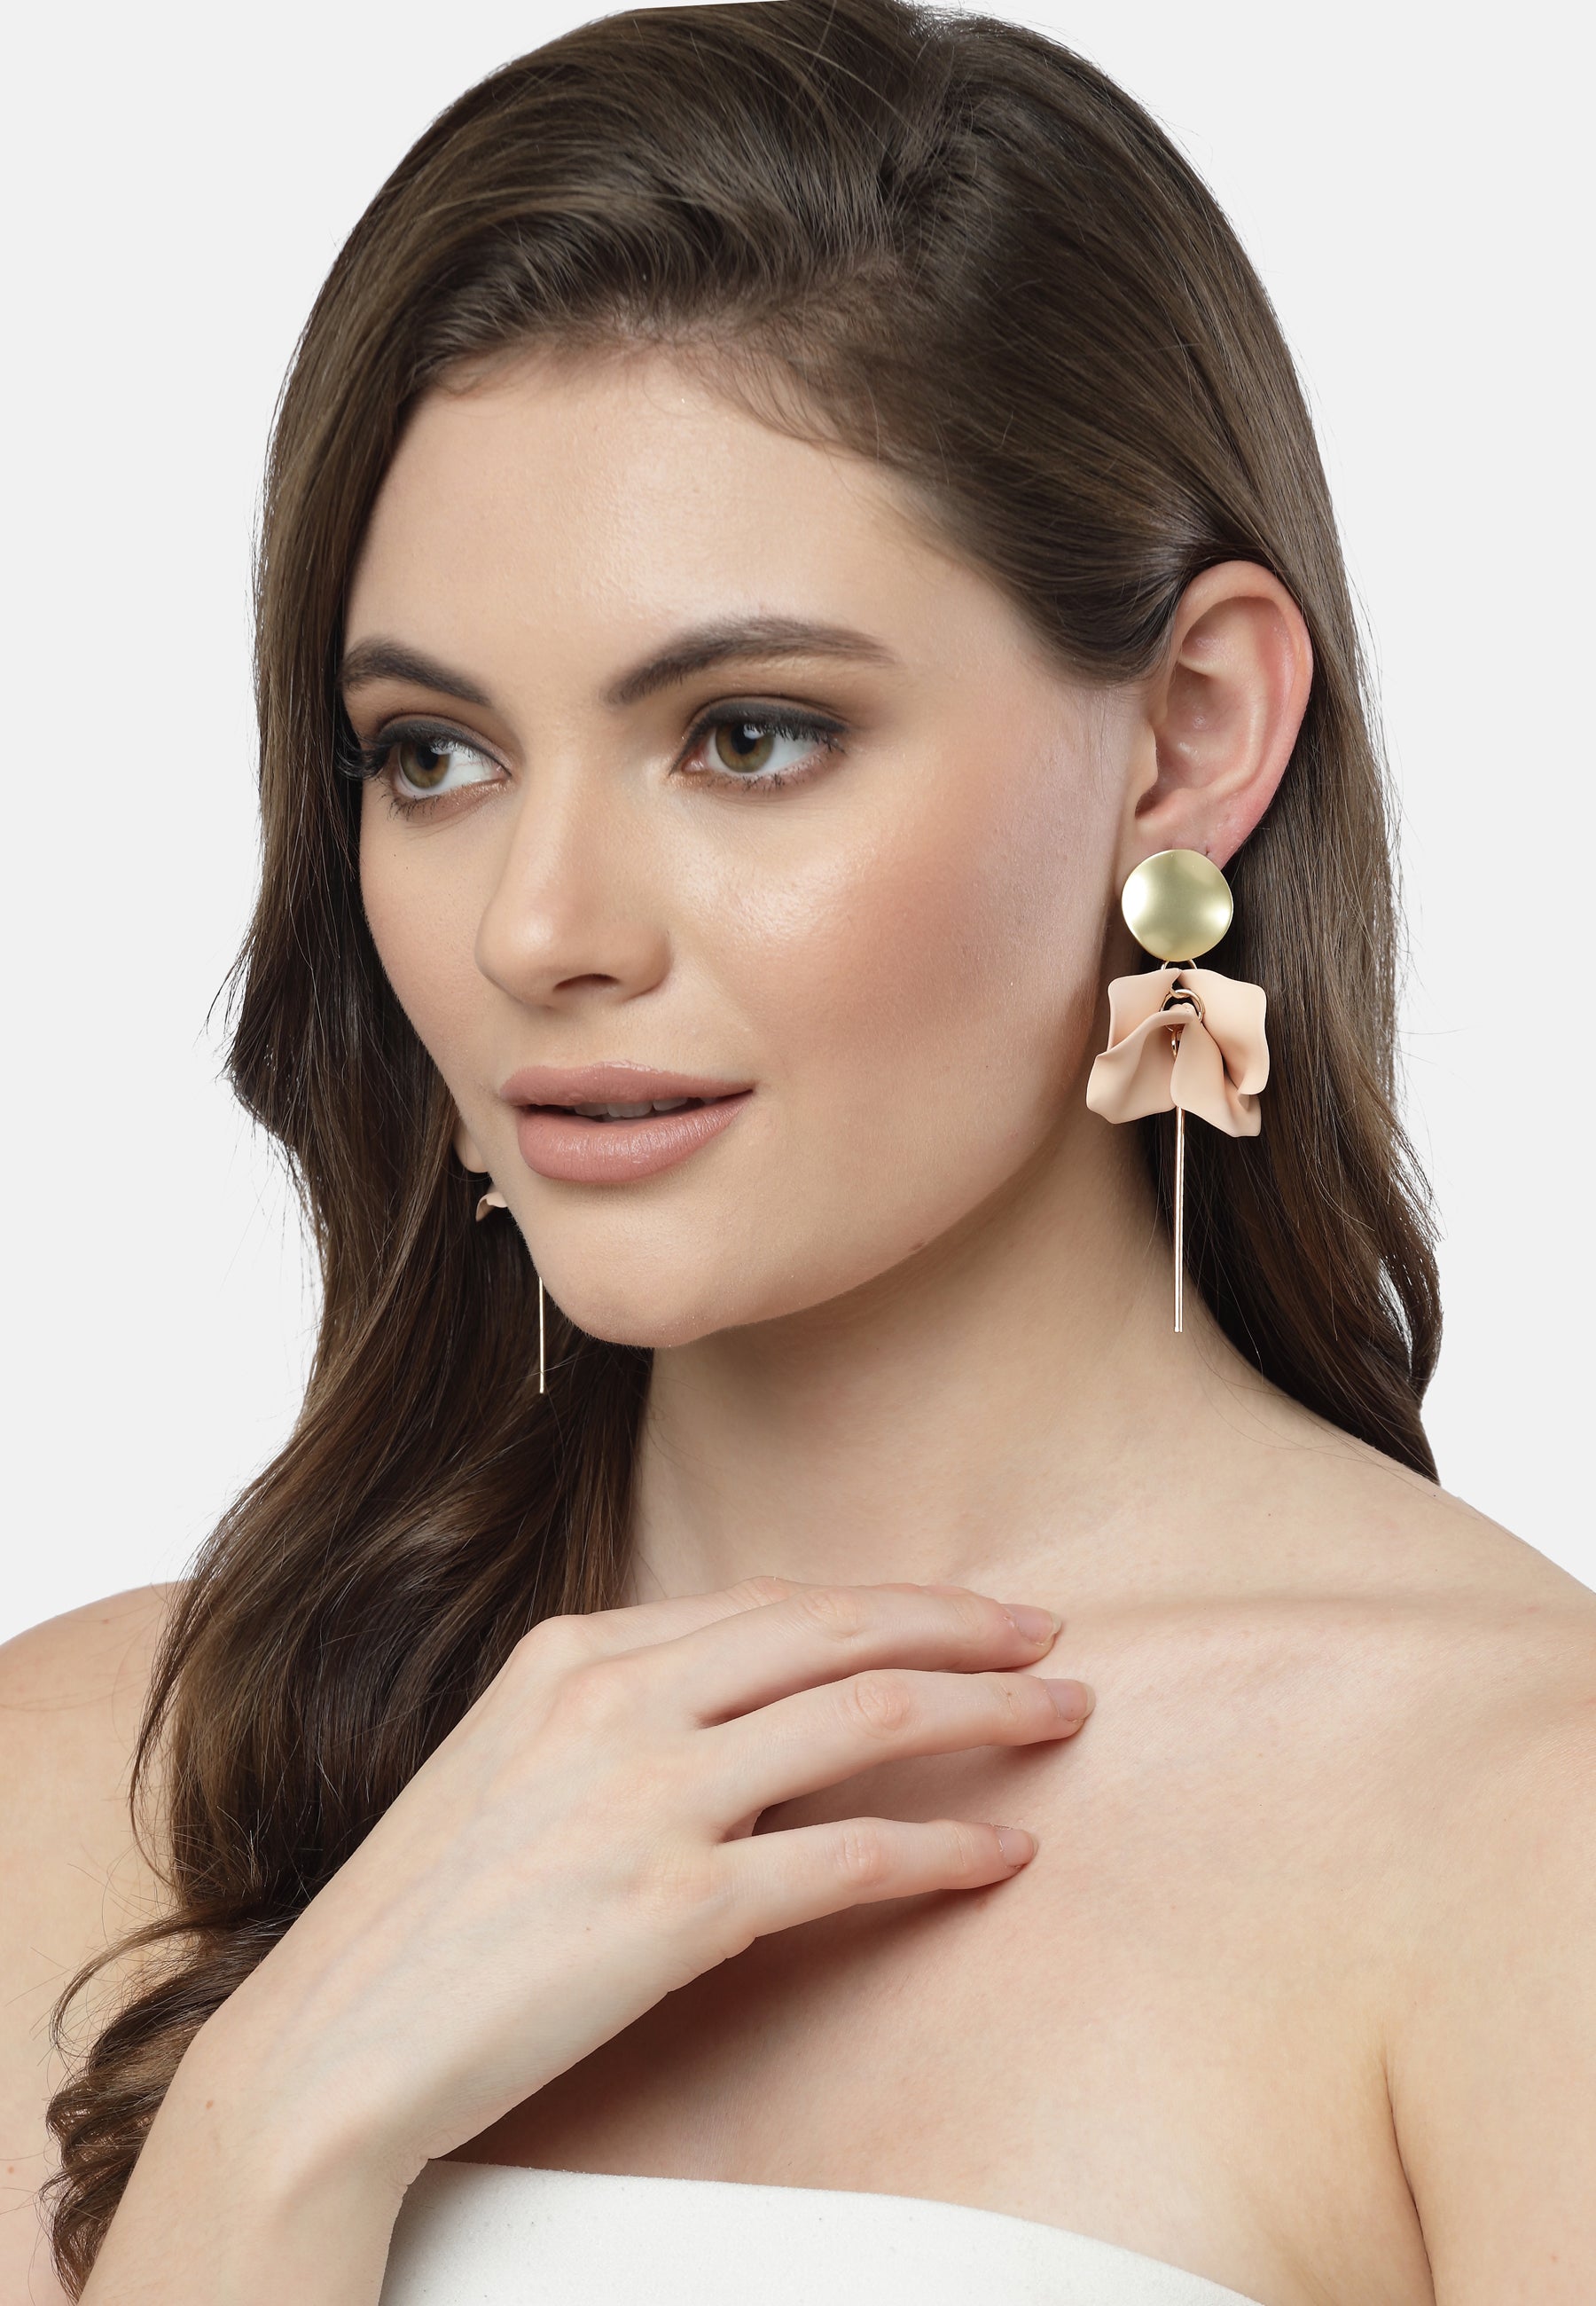 Petals Earrings in peach